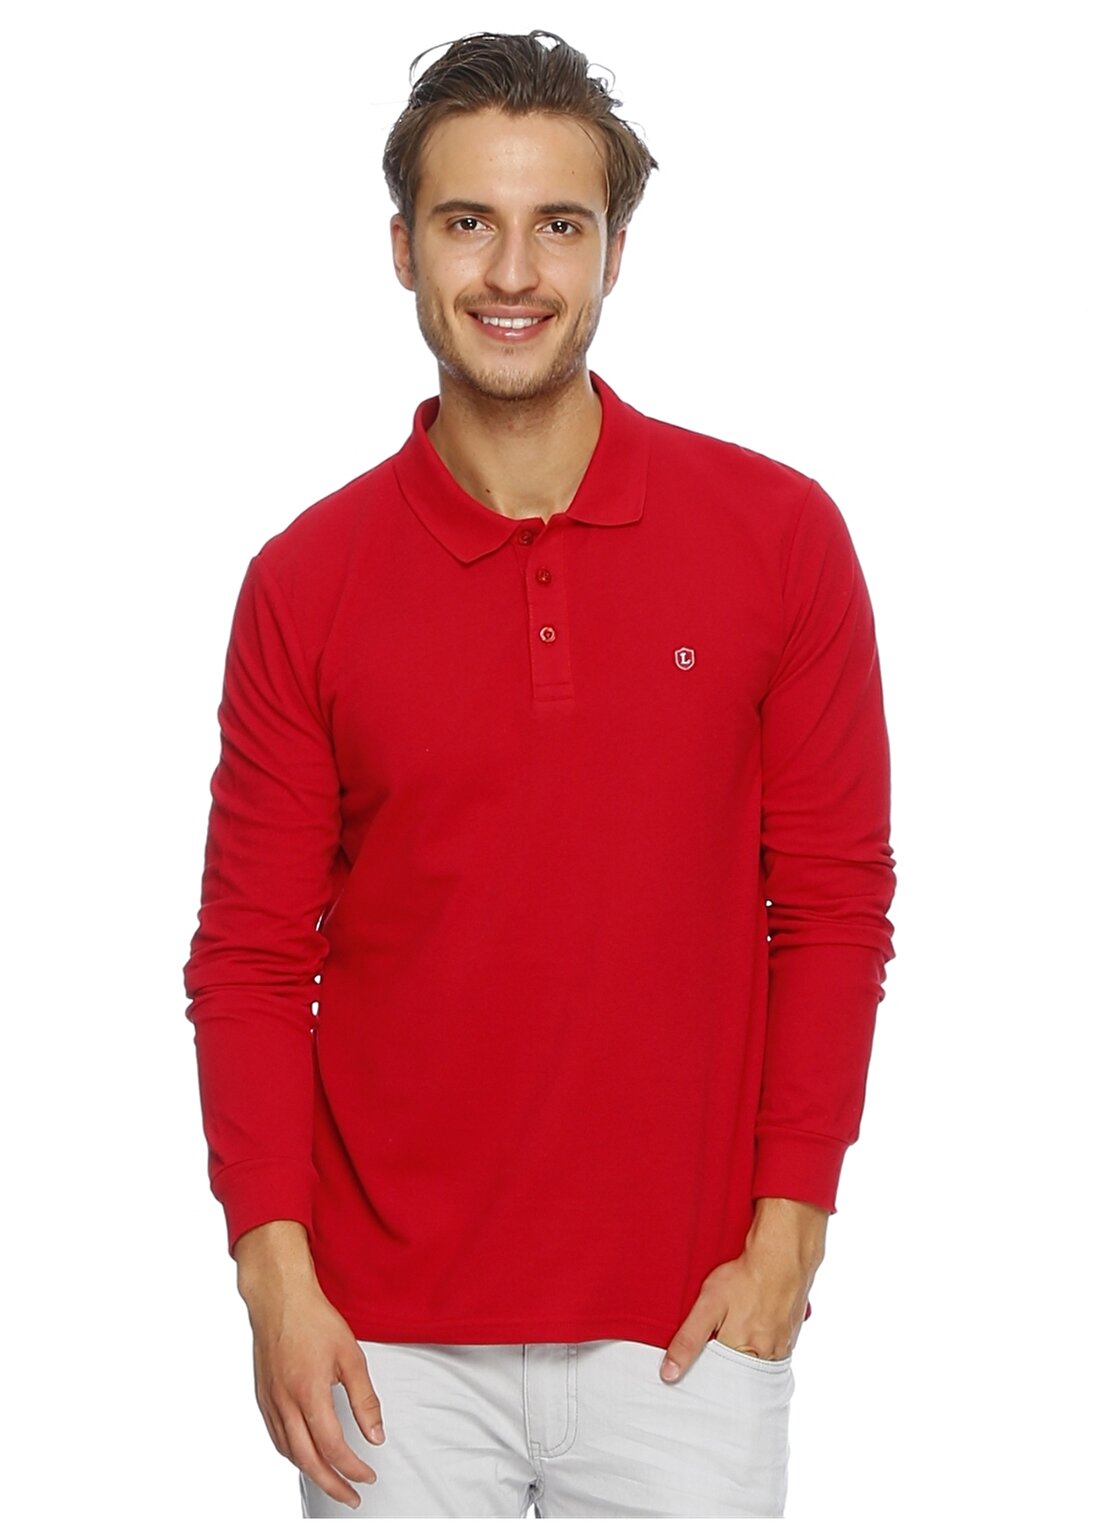 Limon Koyu Kırmızı T-Shirt